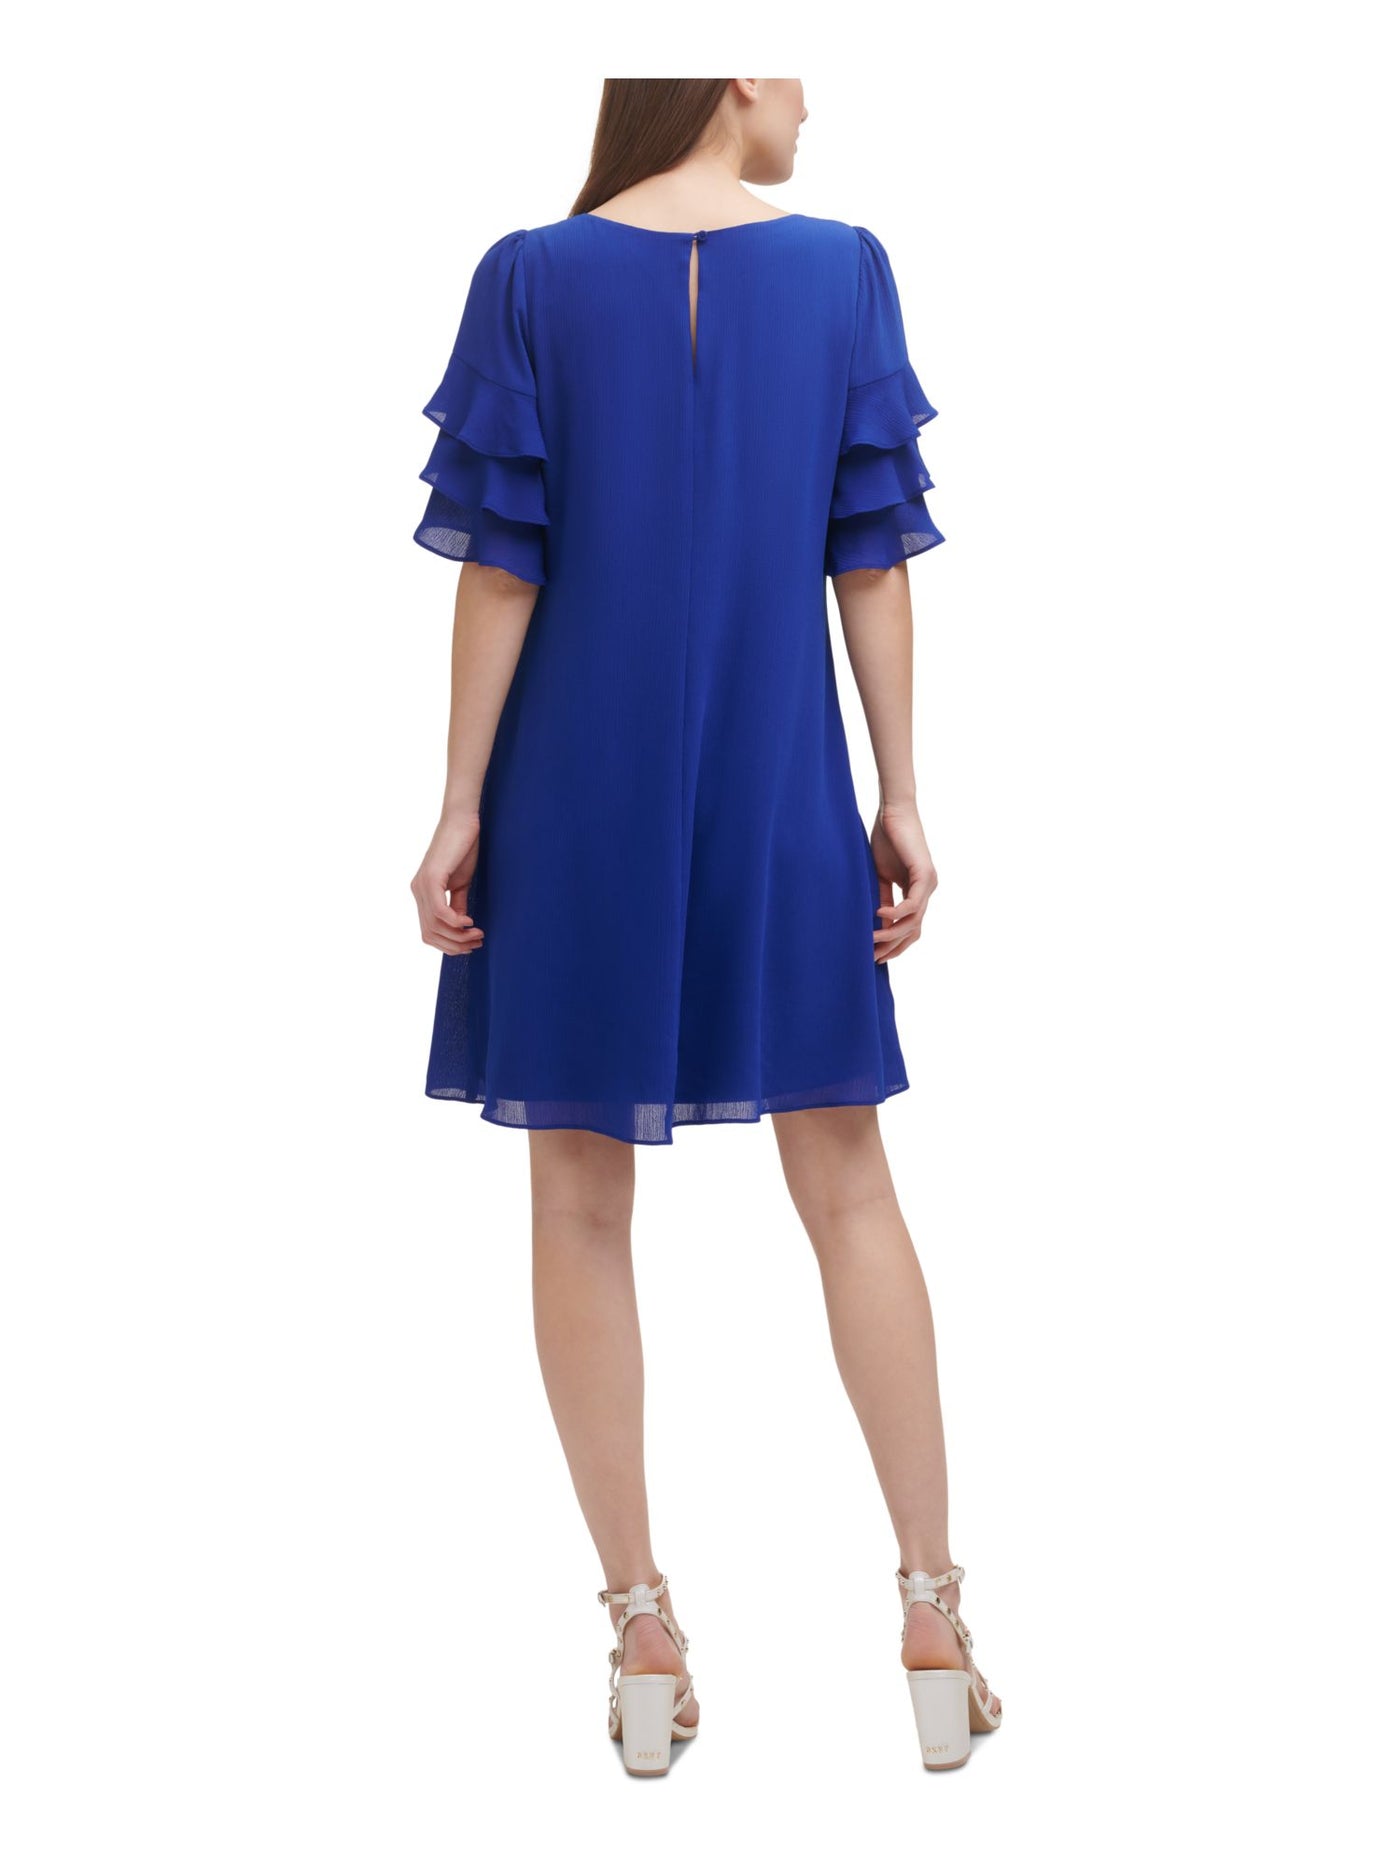 DKNY Womens Blue Flutter Sleeve Scoop Neck Above The Knee Wear To Work Shift Dress 4